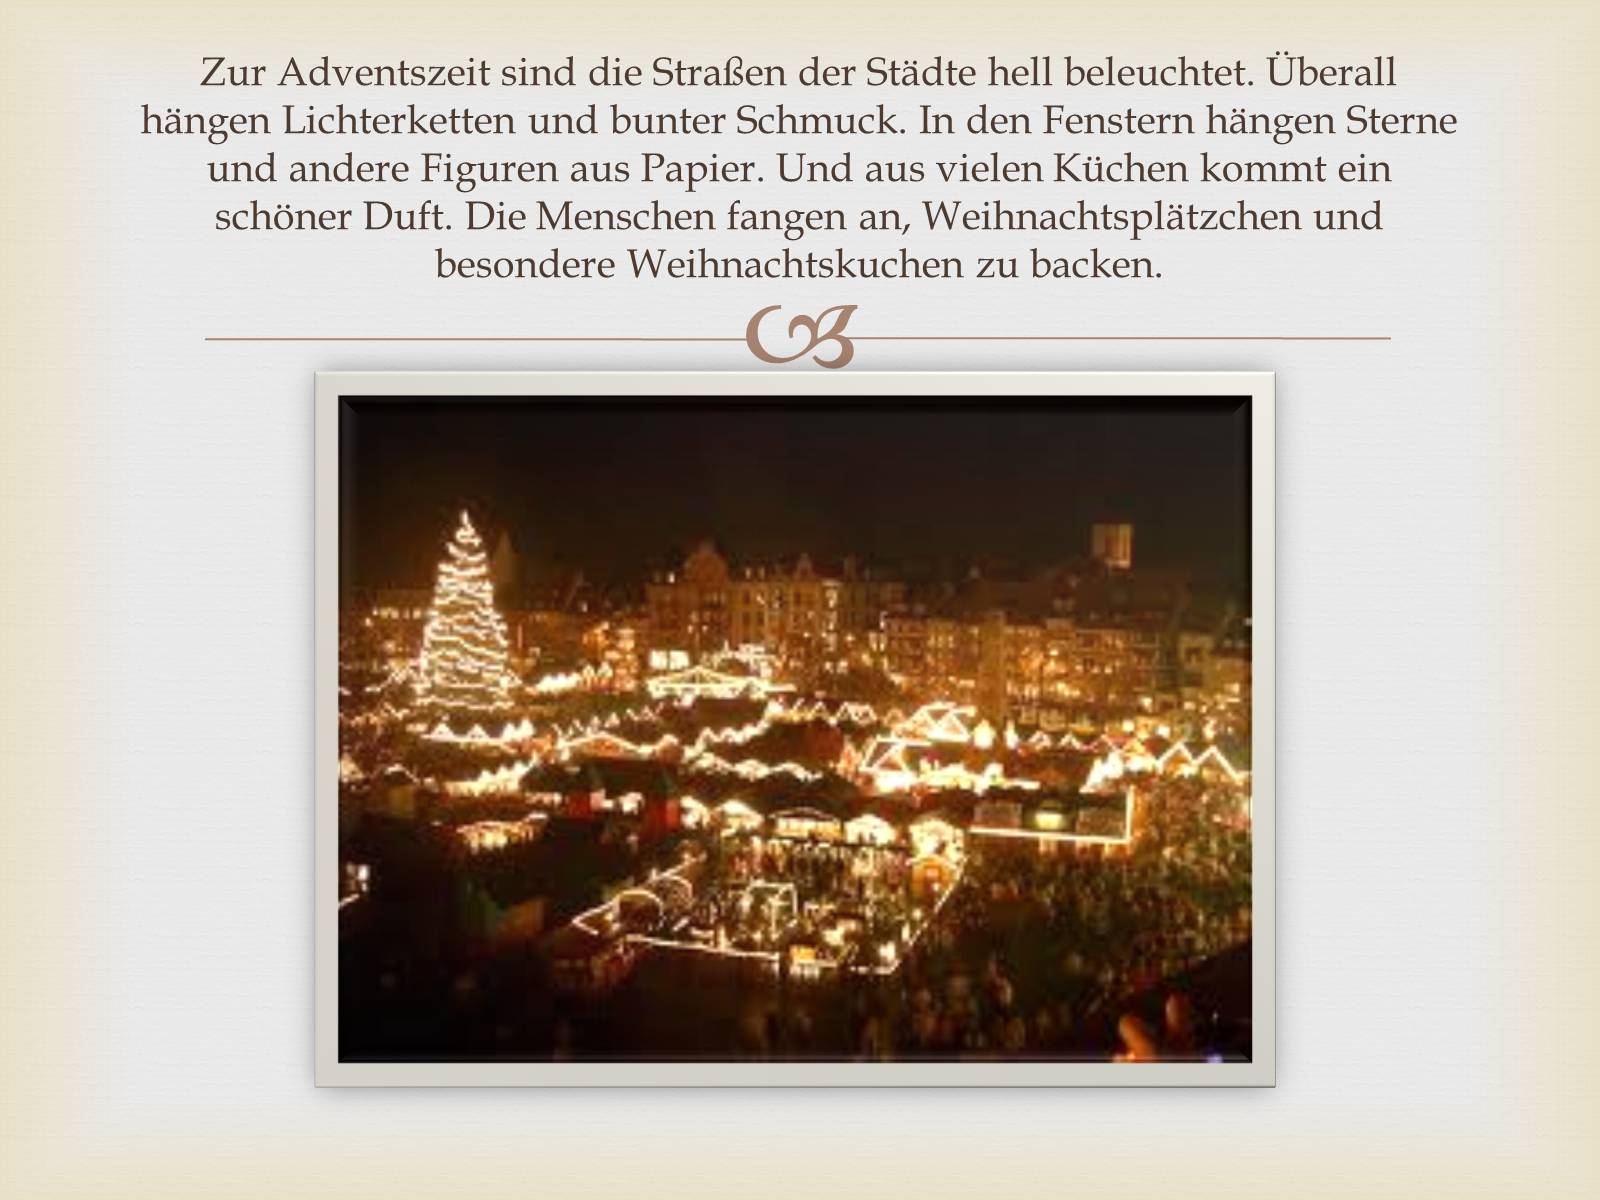 Презентація на тему «Weihnachten in Deutschland» (варіант 1) - Слайд #14